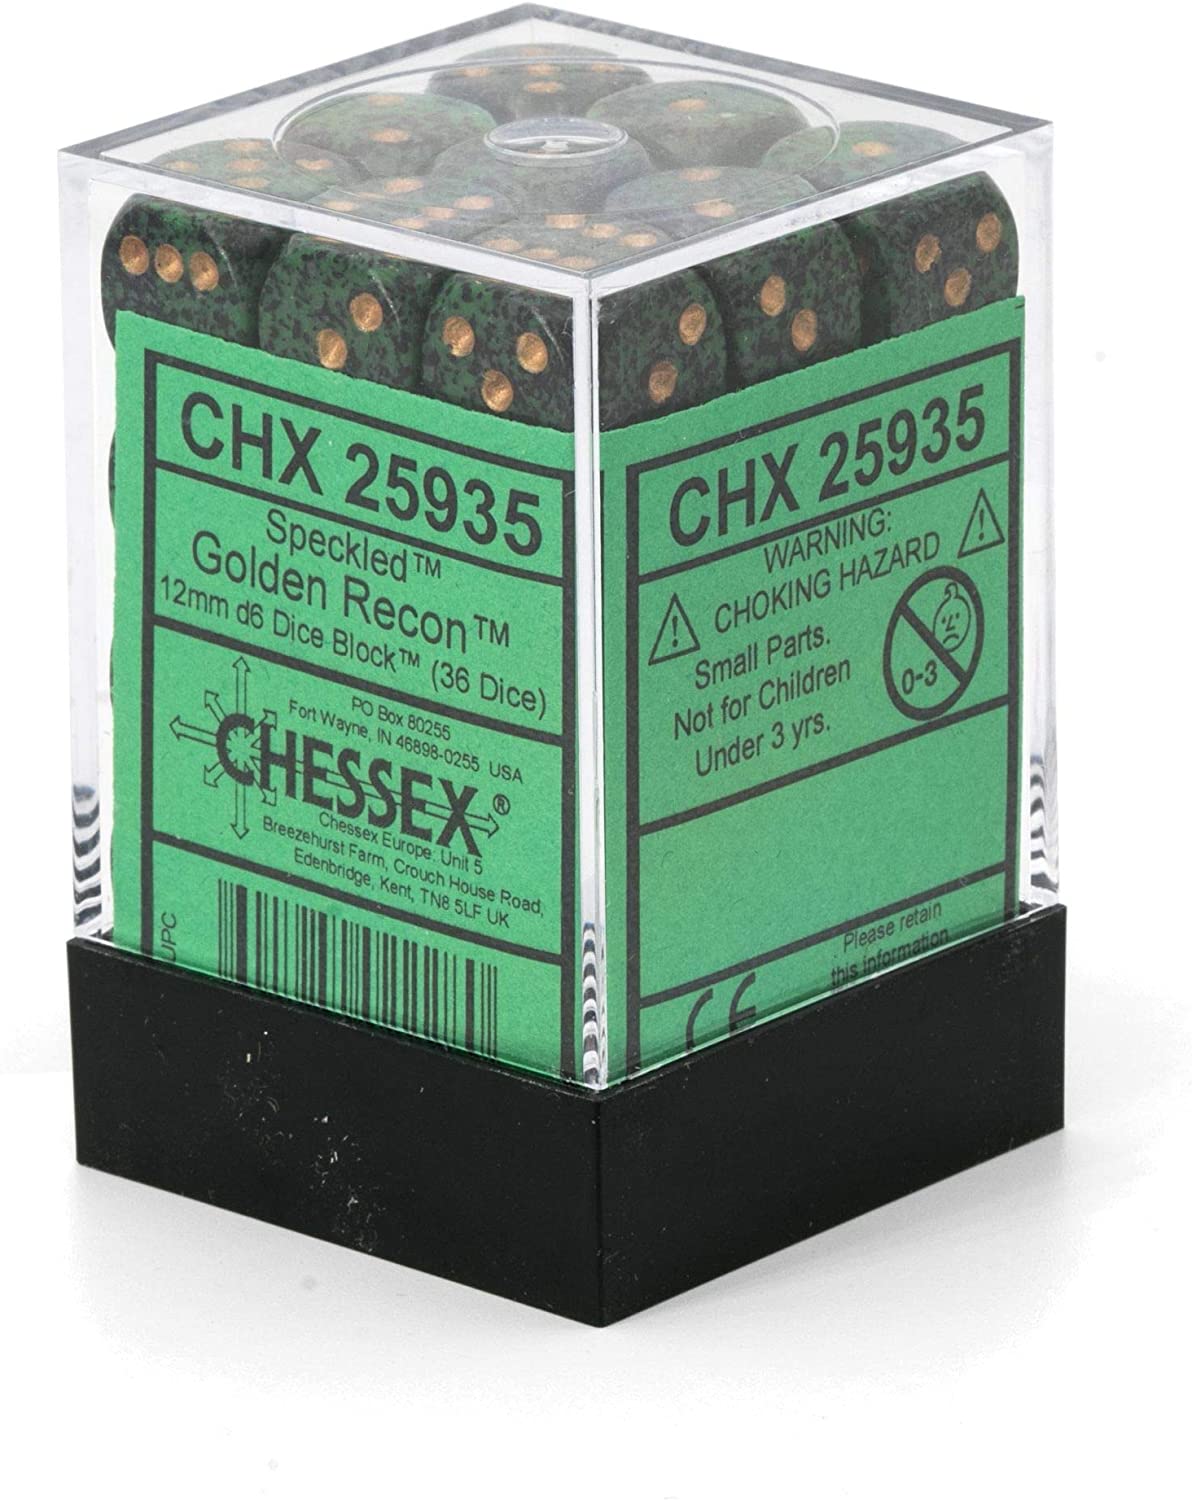 Chessex Dice: D6 Block 12mm - Speckled - Golden Recon (CHX 25935) - Gamescape